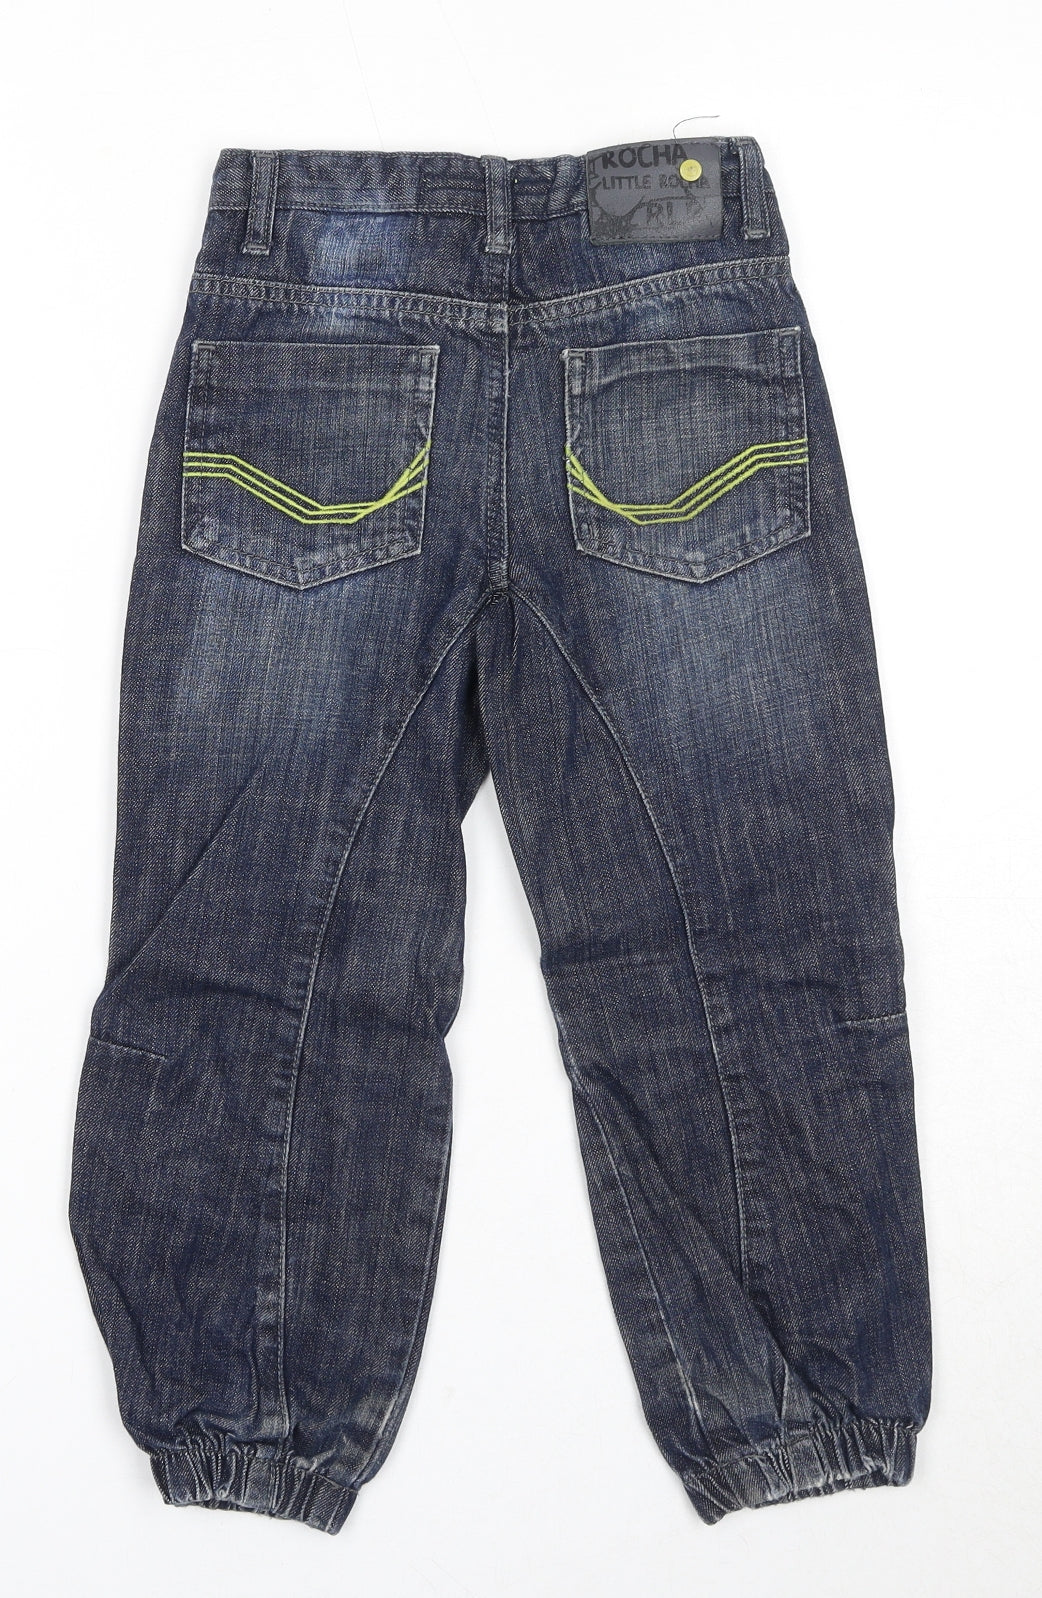 Debenhams Boys Blue Cotton Tapered Jeans Size 5-6 Years Regular Snap